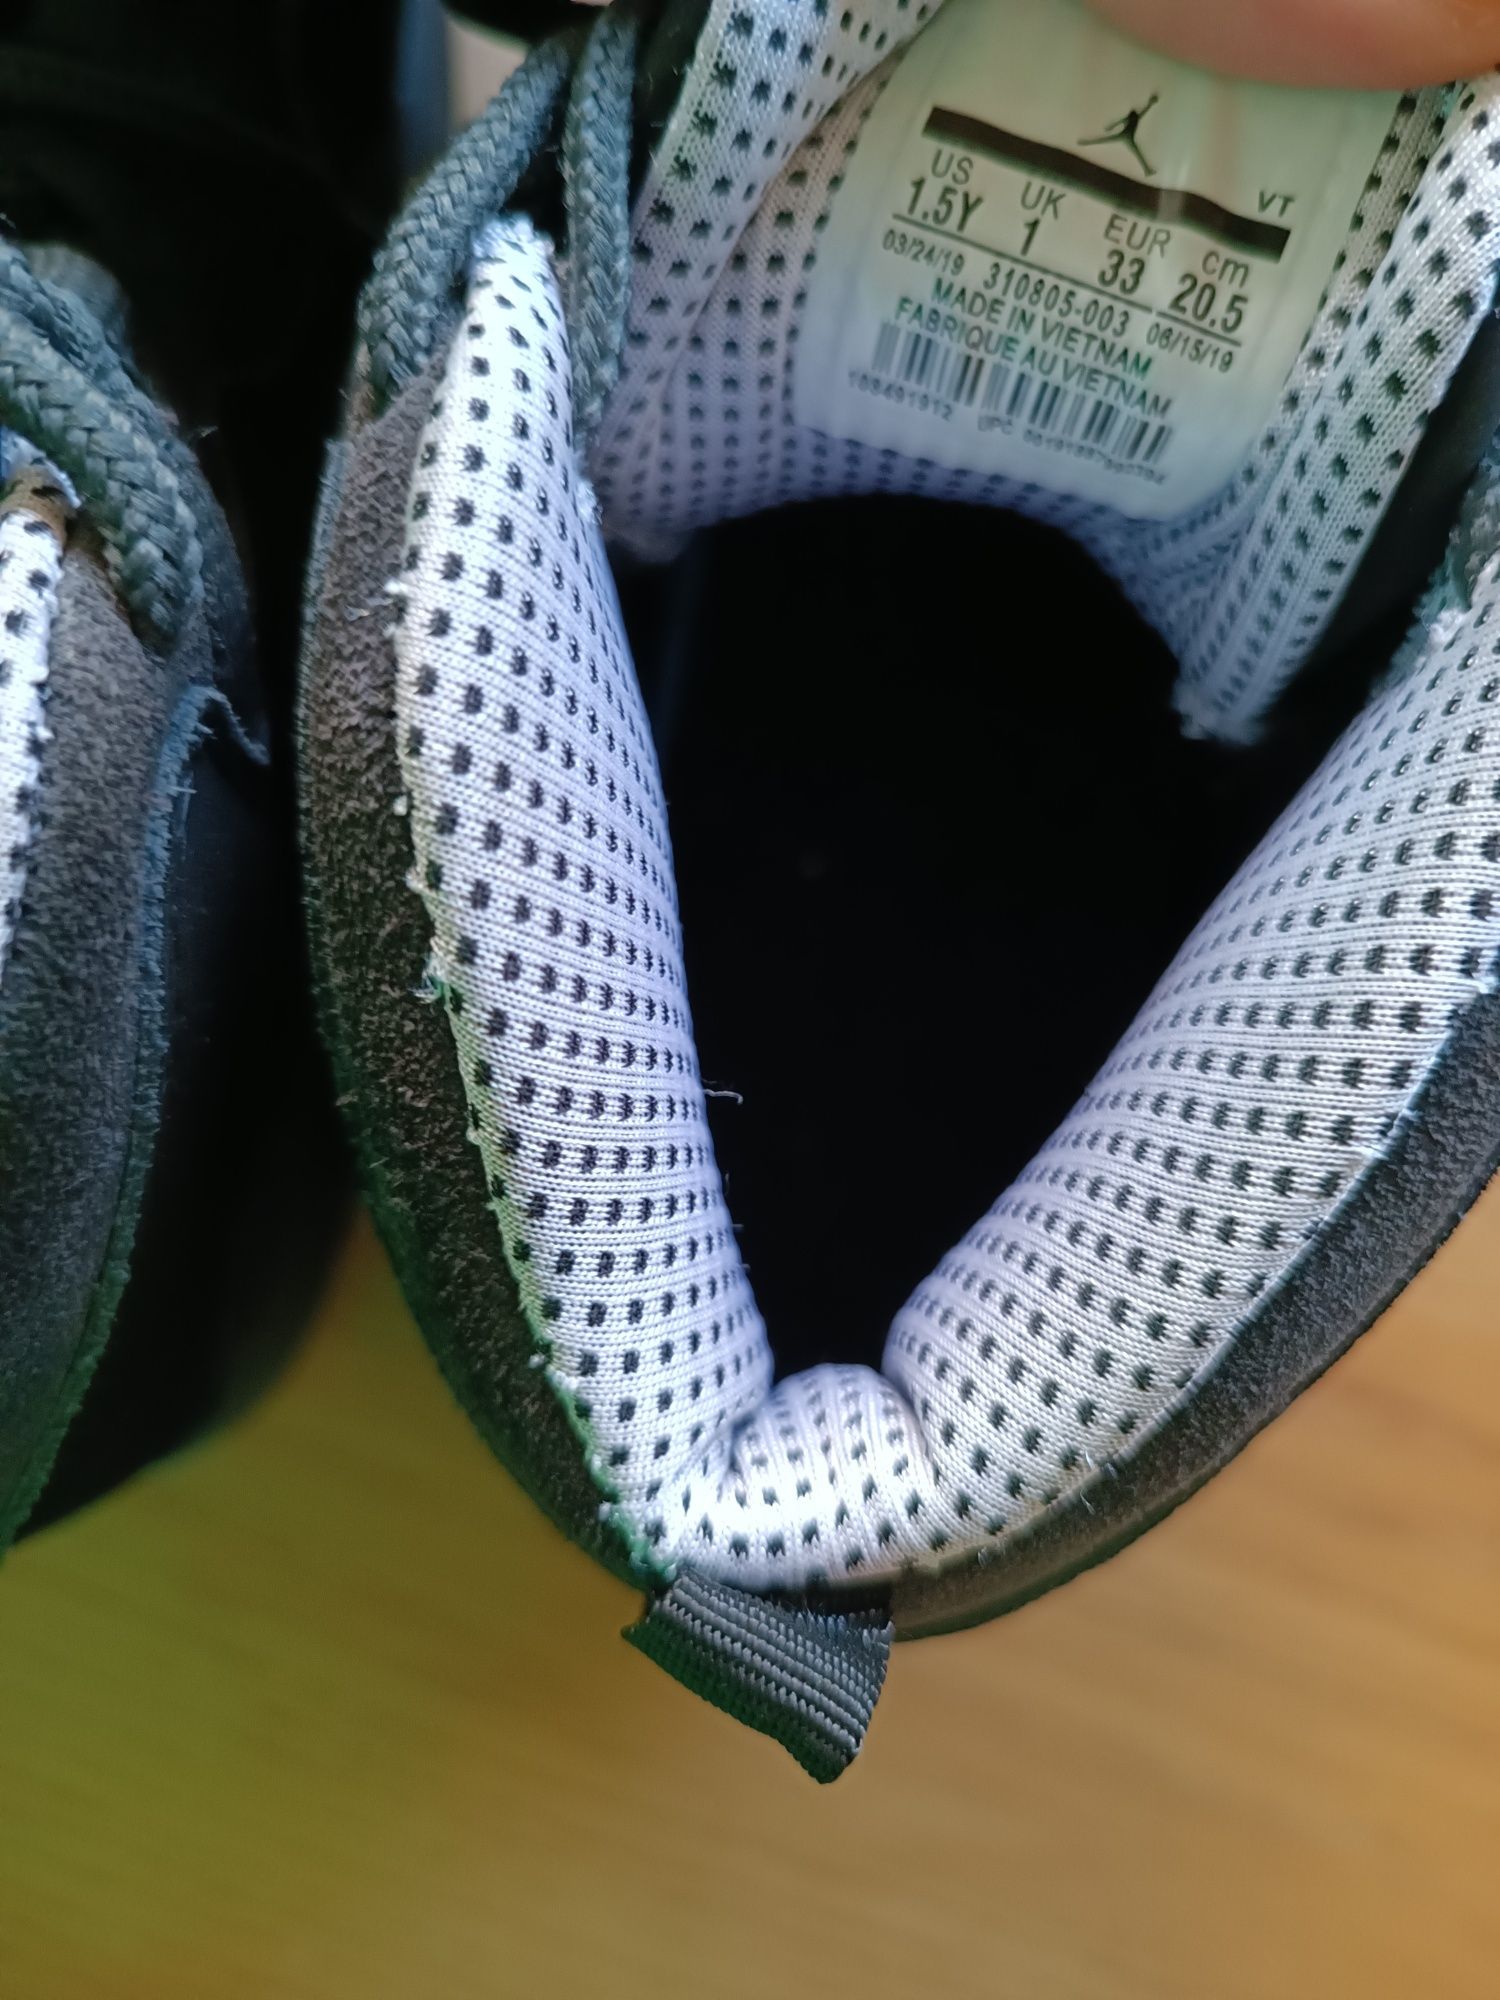 Adidasy/ trampki za kostkę Nike Jordan r. 33